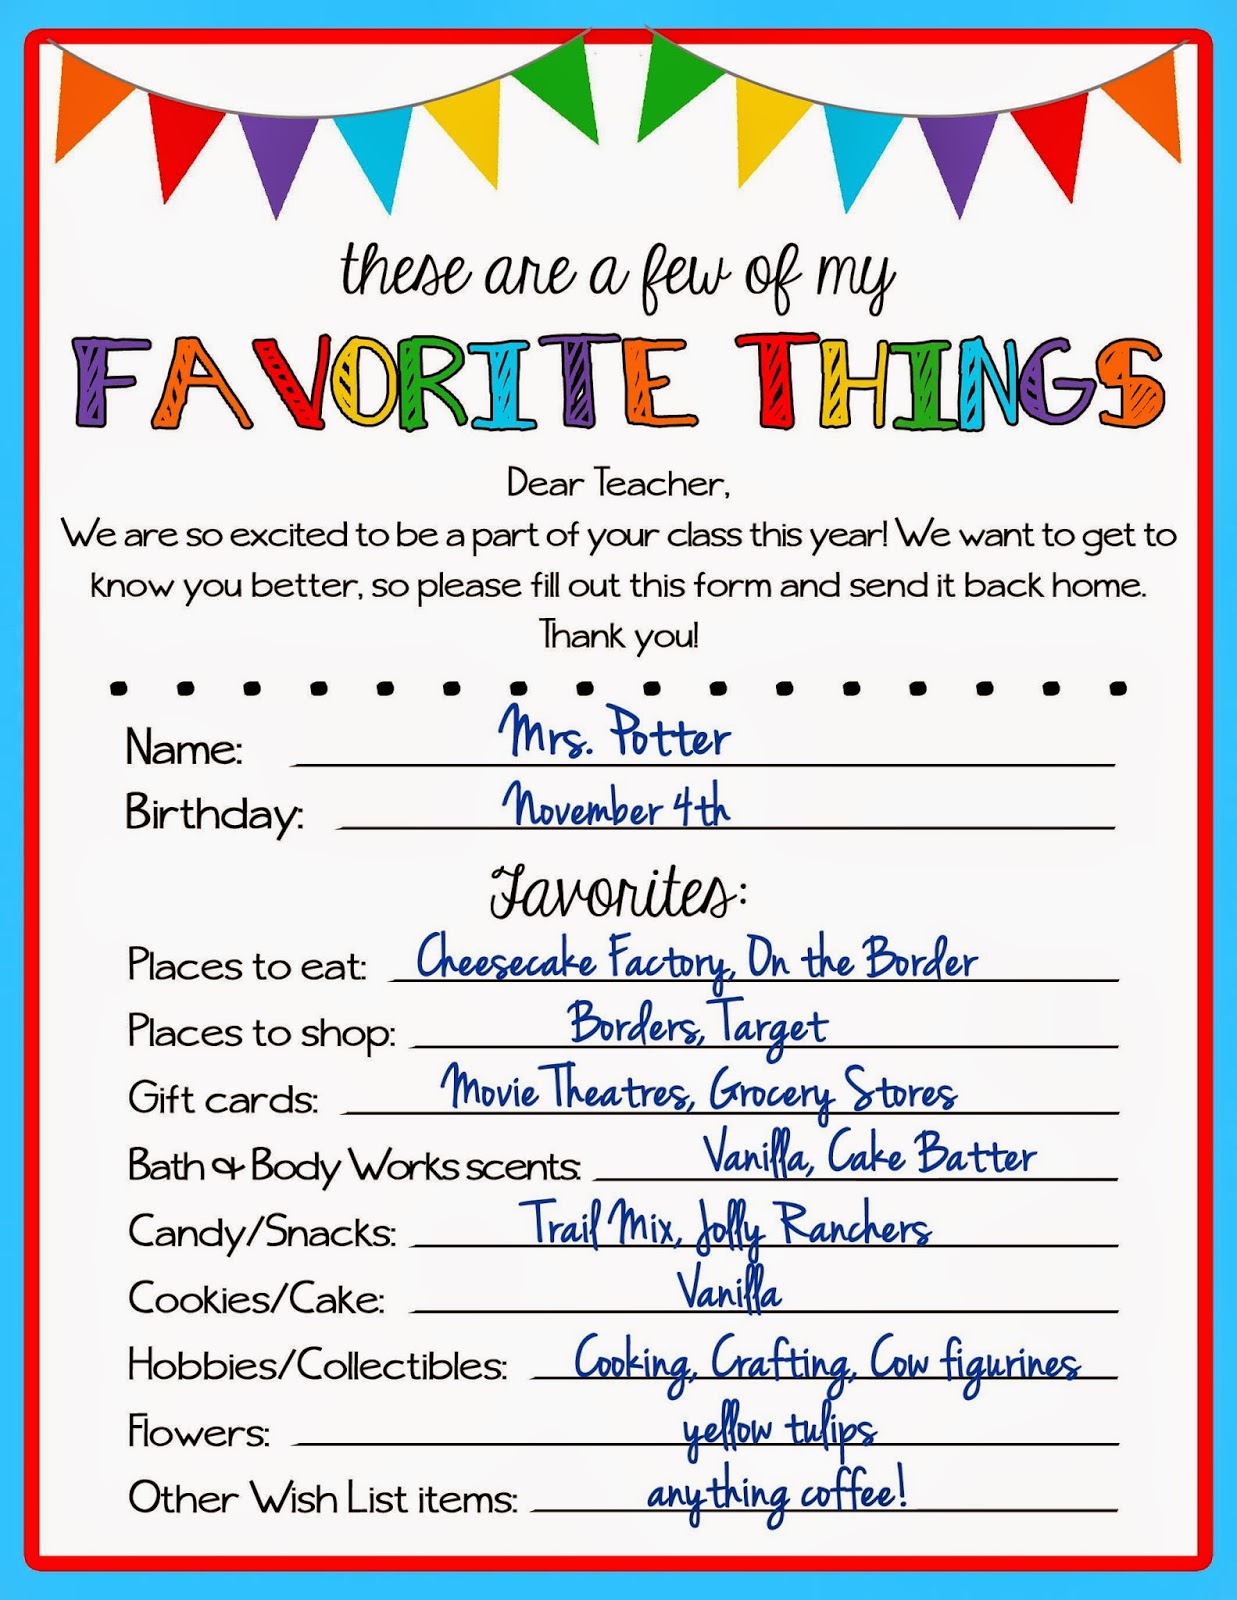 kicking-ass-crafting-teacher-favorite-things-questionnaire